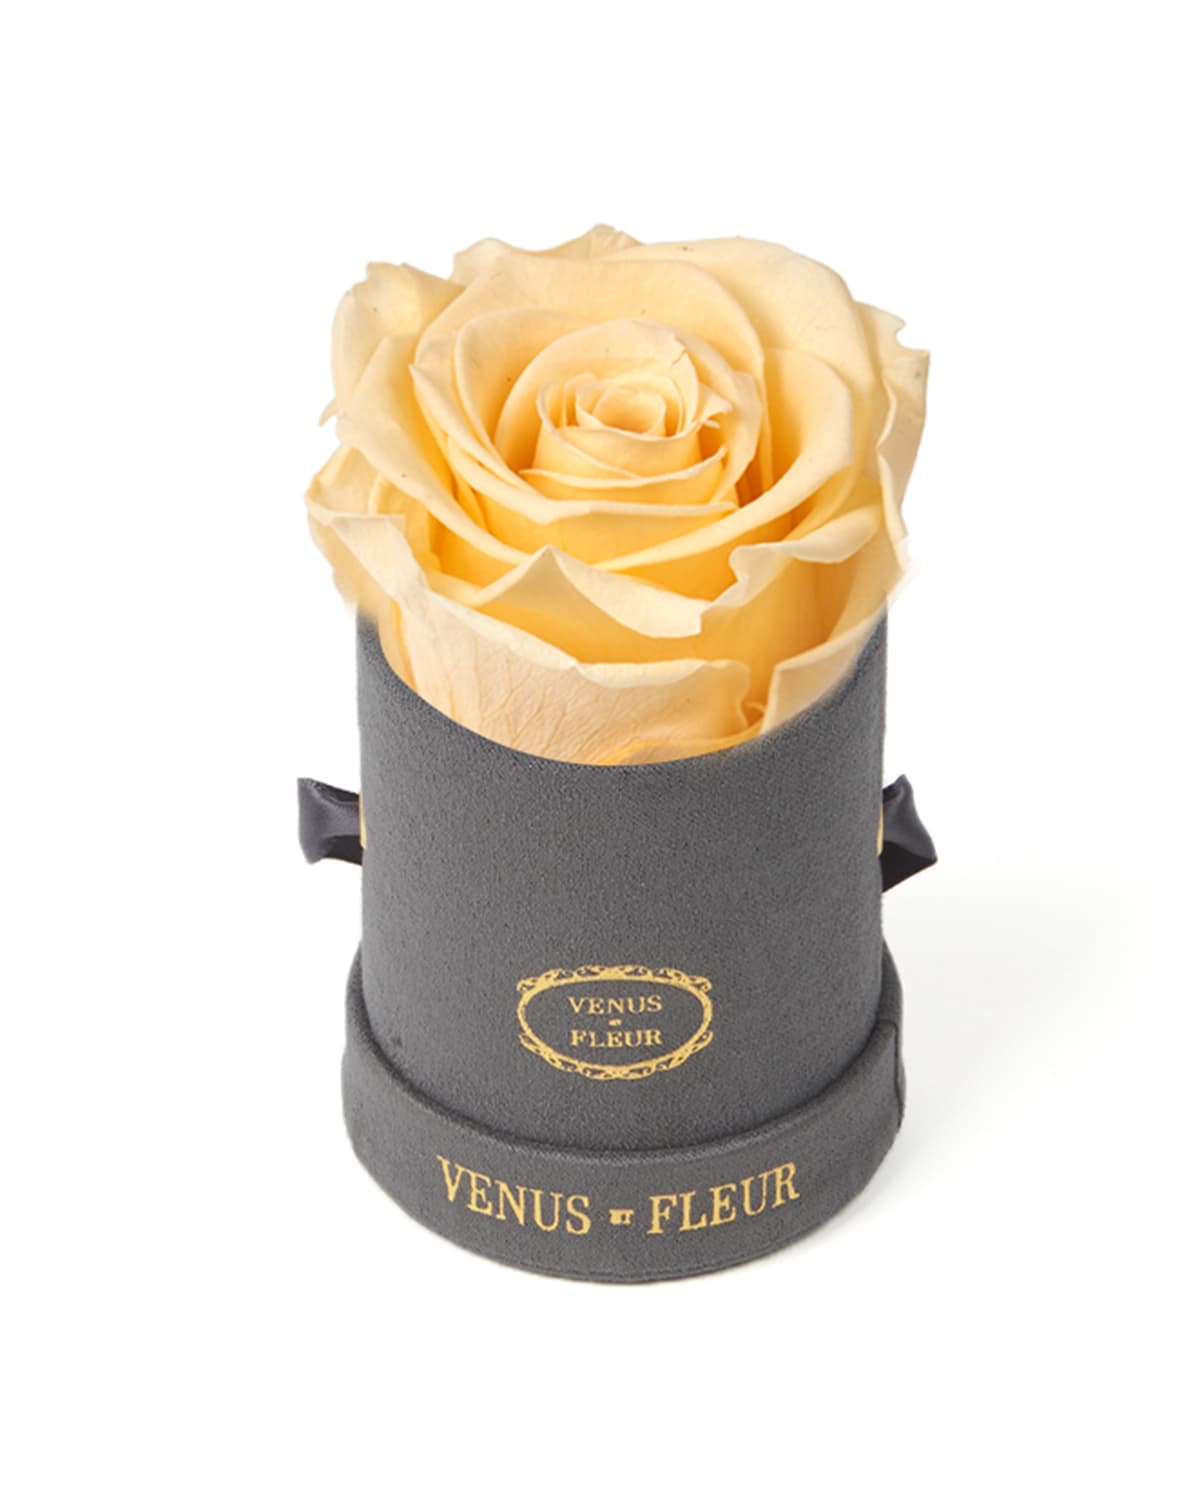 Venus Et Fleur Suede Mini Round Rose Box In Champagne